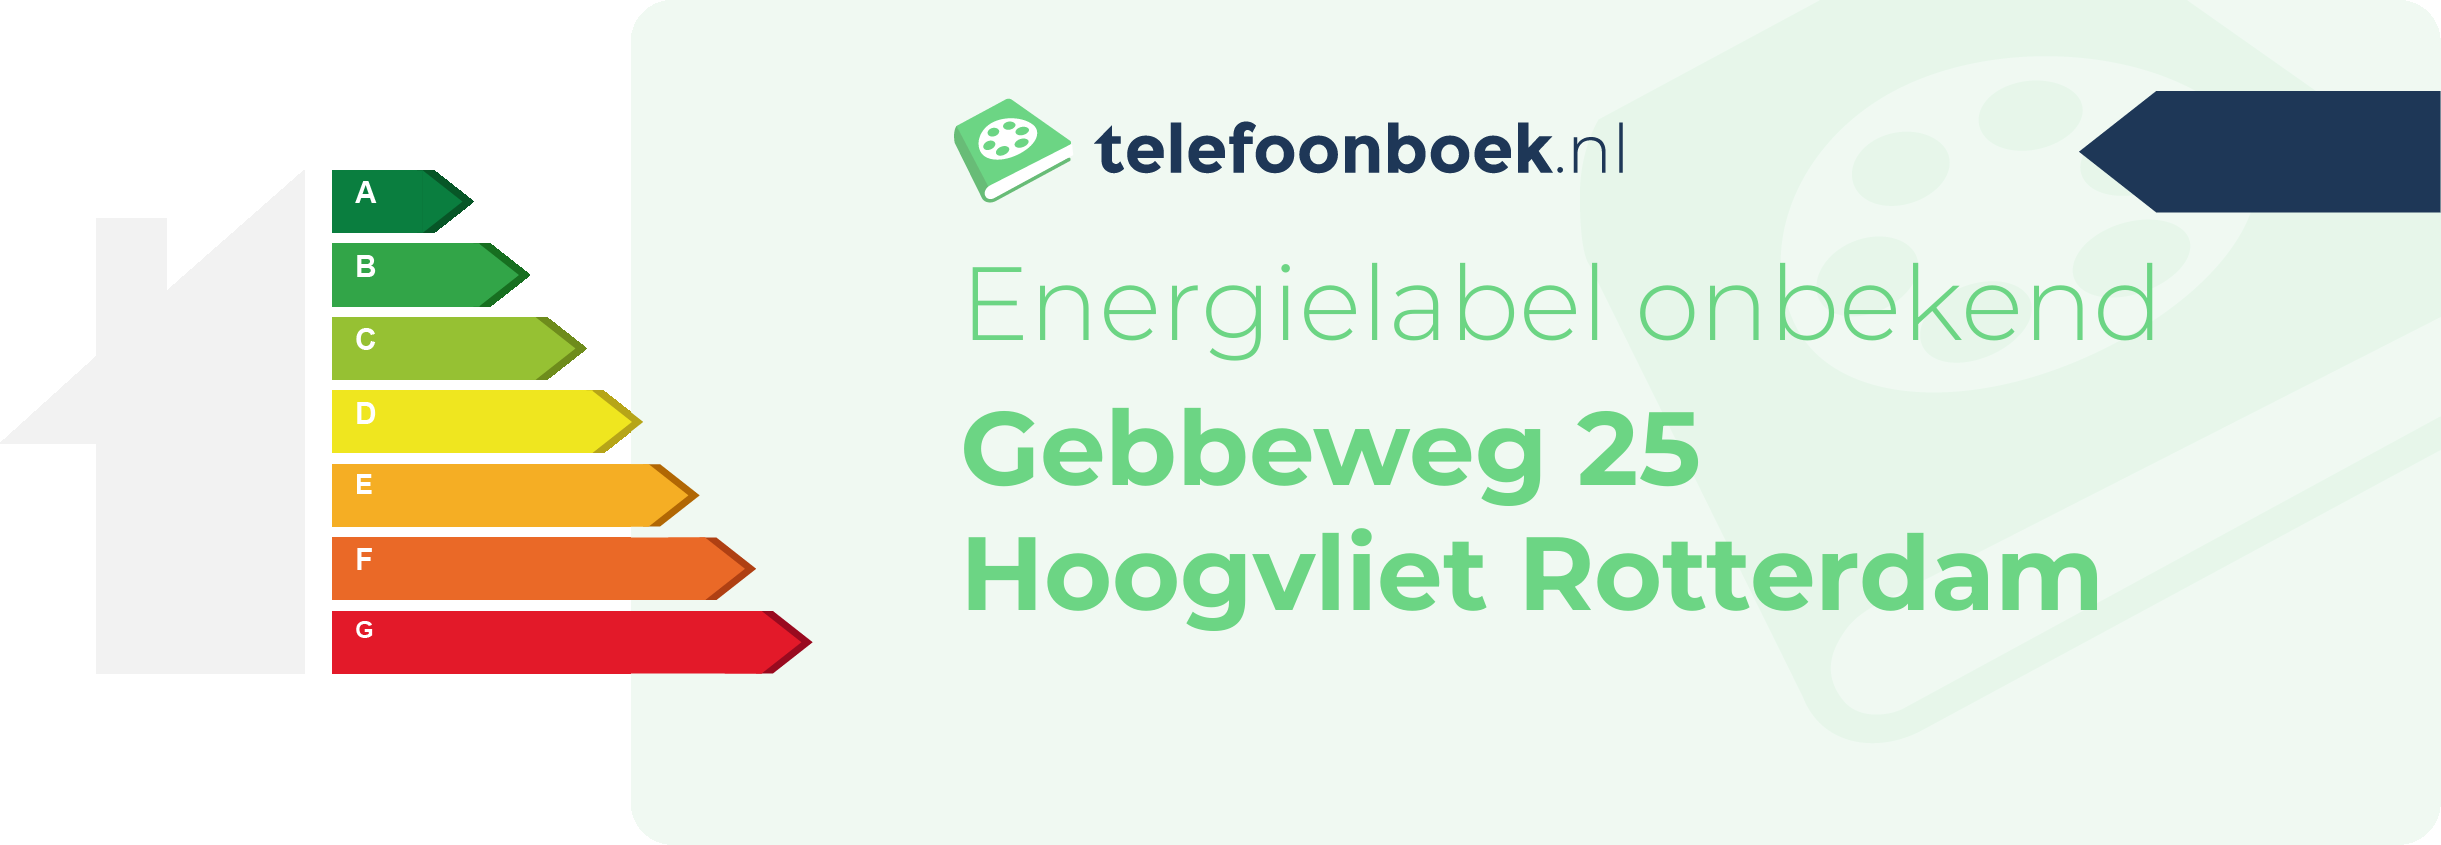 Energielabel Gebbeweg 25 Hoogvliet Rotterdam